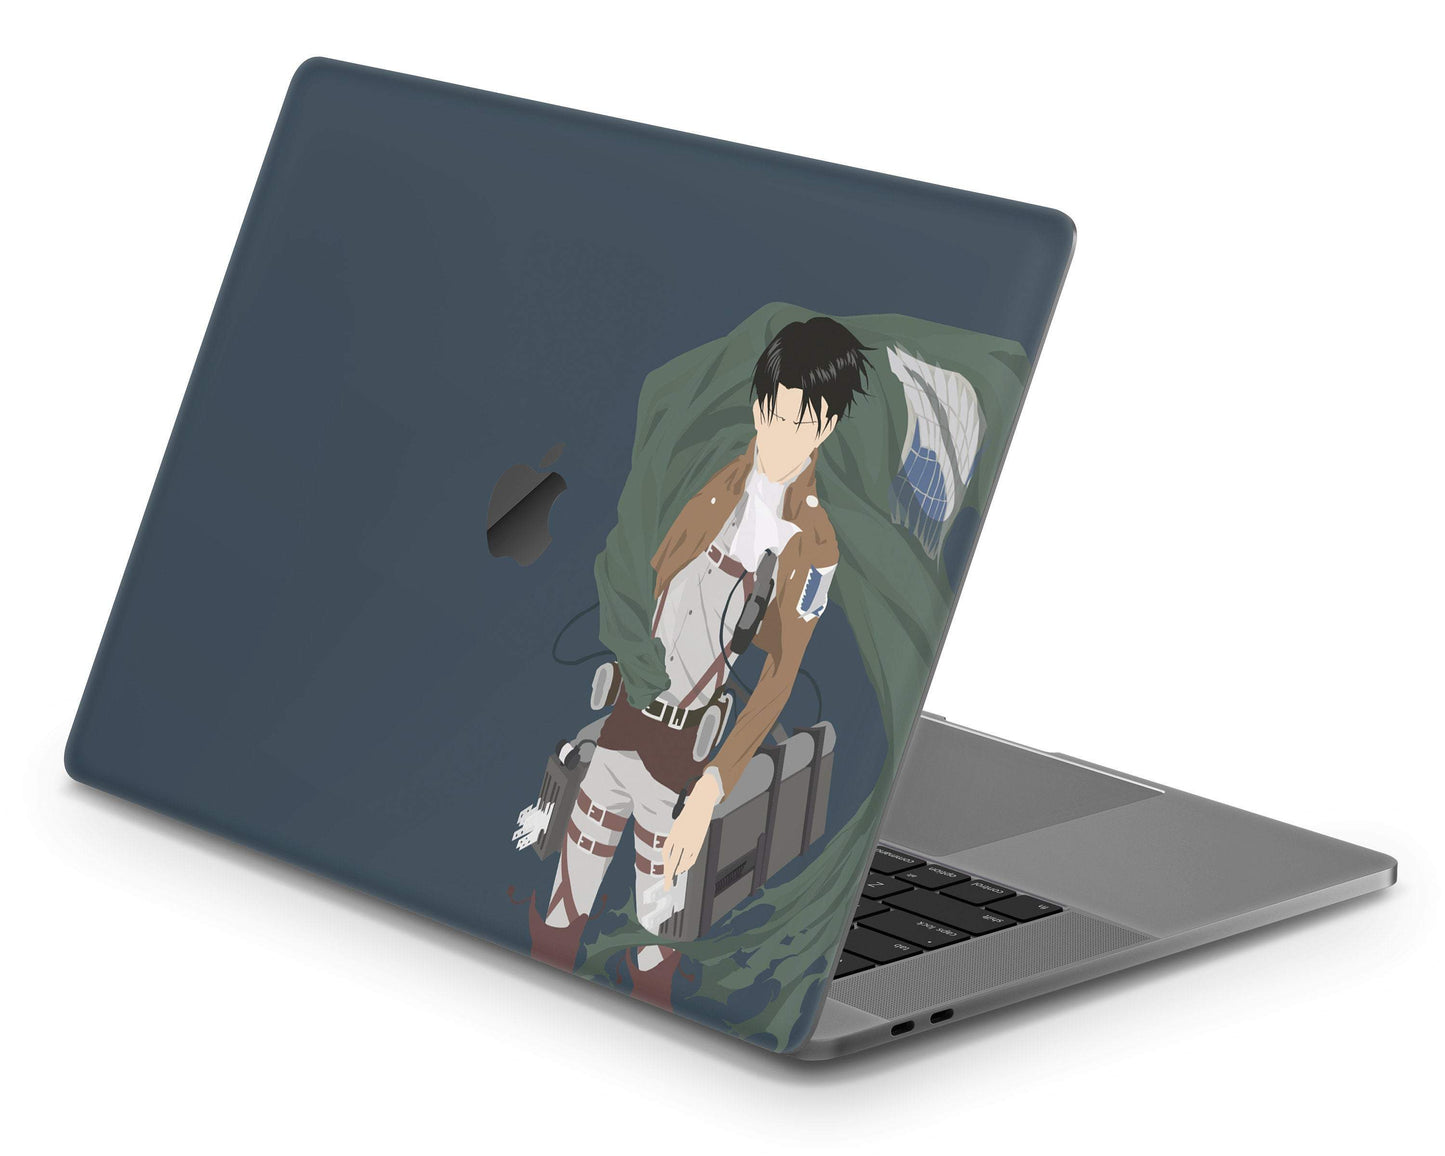 Apple MacBook Minimalistic Attack on Titan Levi Pro 16" (A2141) Skins - Anime Attack on Titan Skin